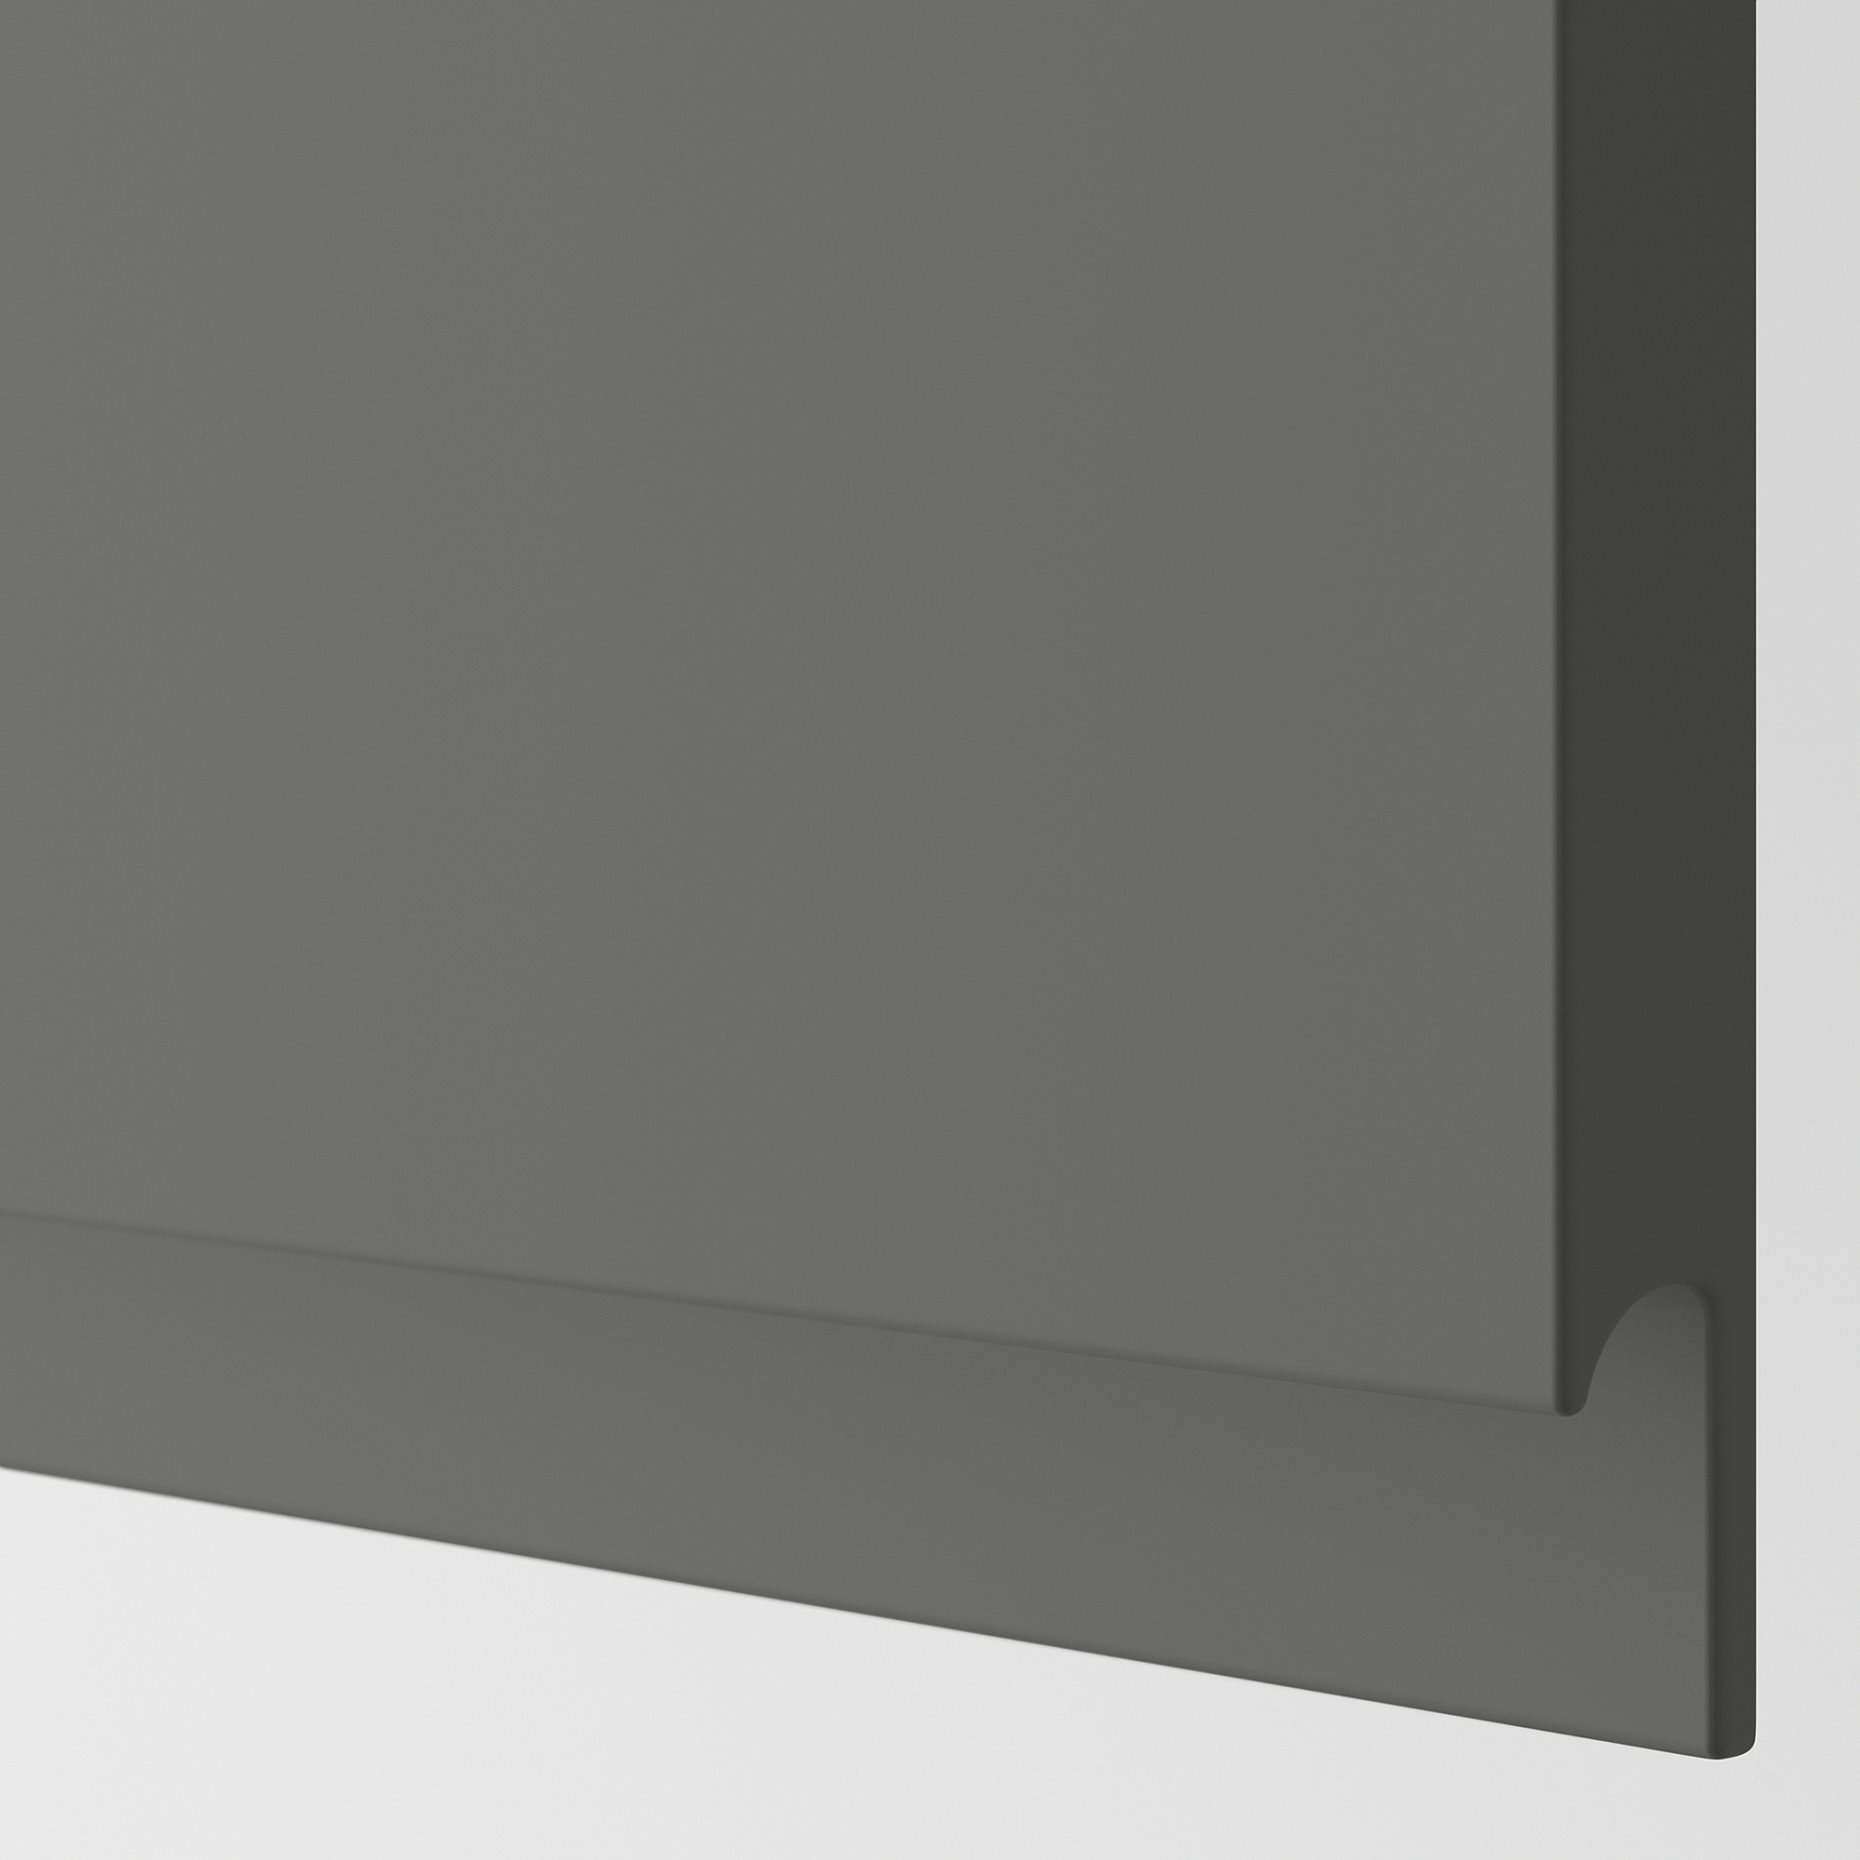 METOD, ντουλάπι βάσης για νεροχύτη/διαλογή απορριμμάτων, 40x60 cm, 094.567.31